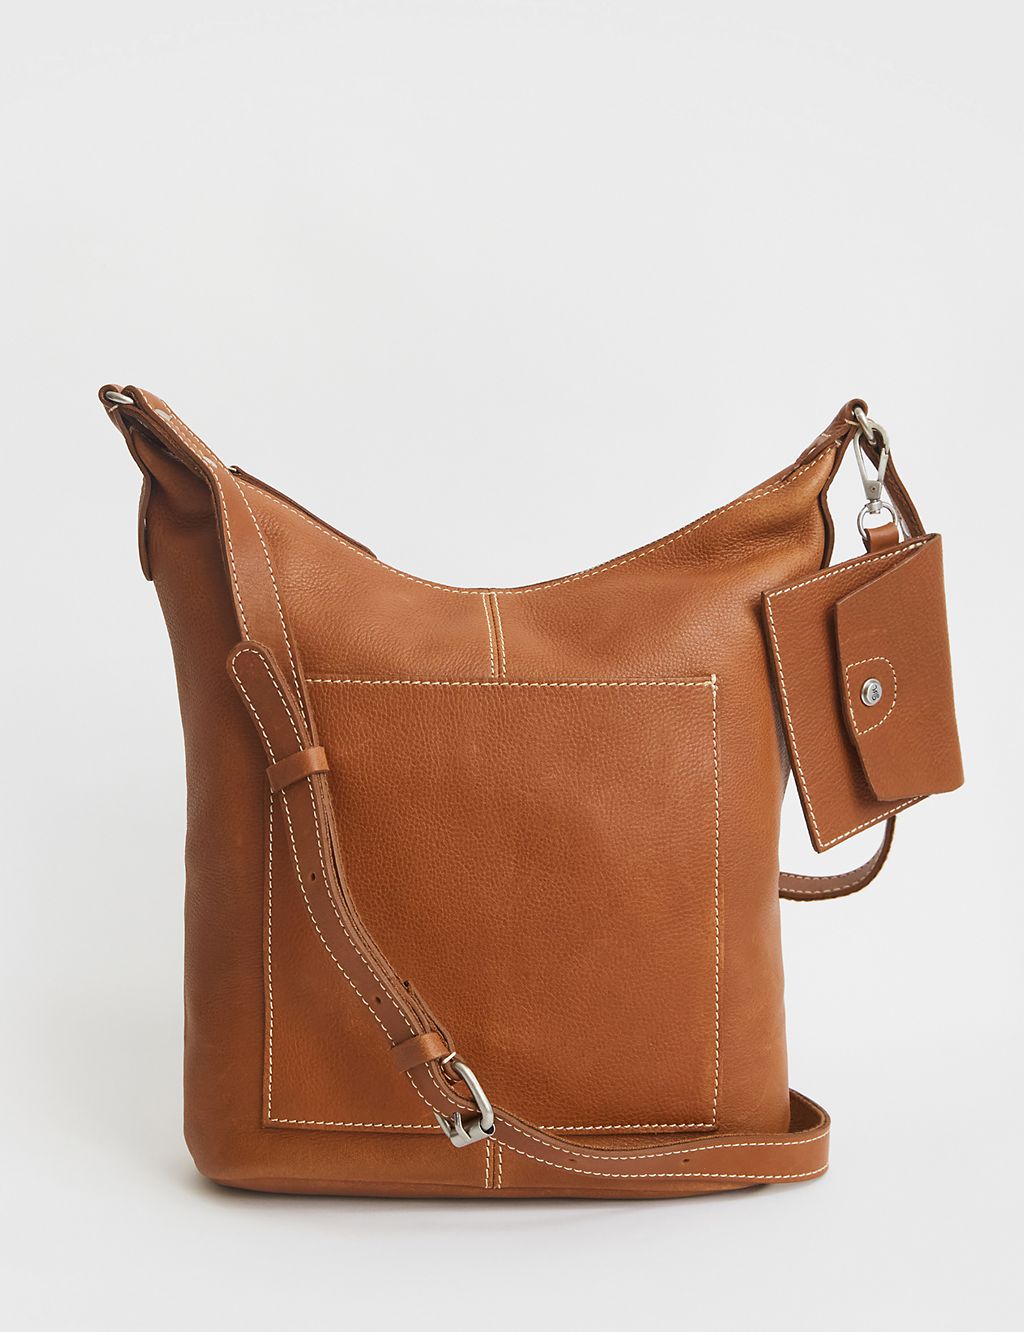 Leather Cross Body Bag | White Stuff | M&S